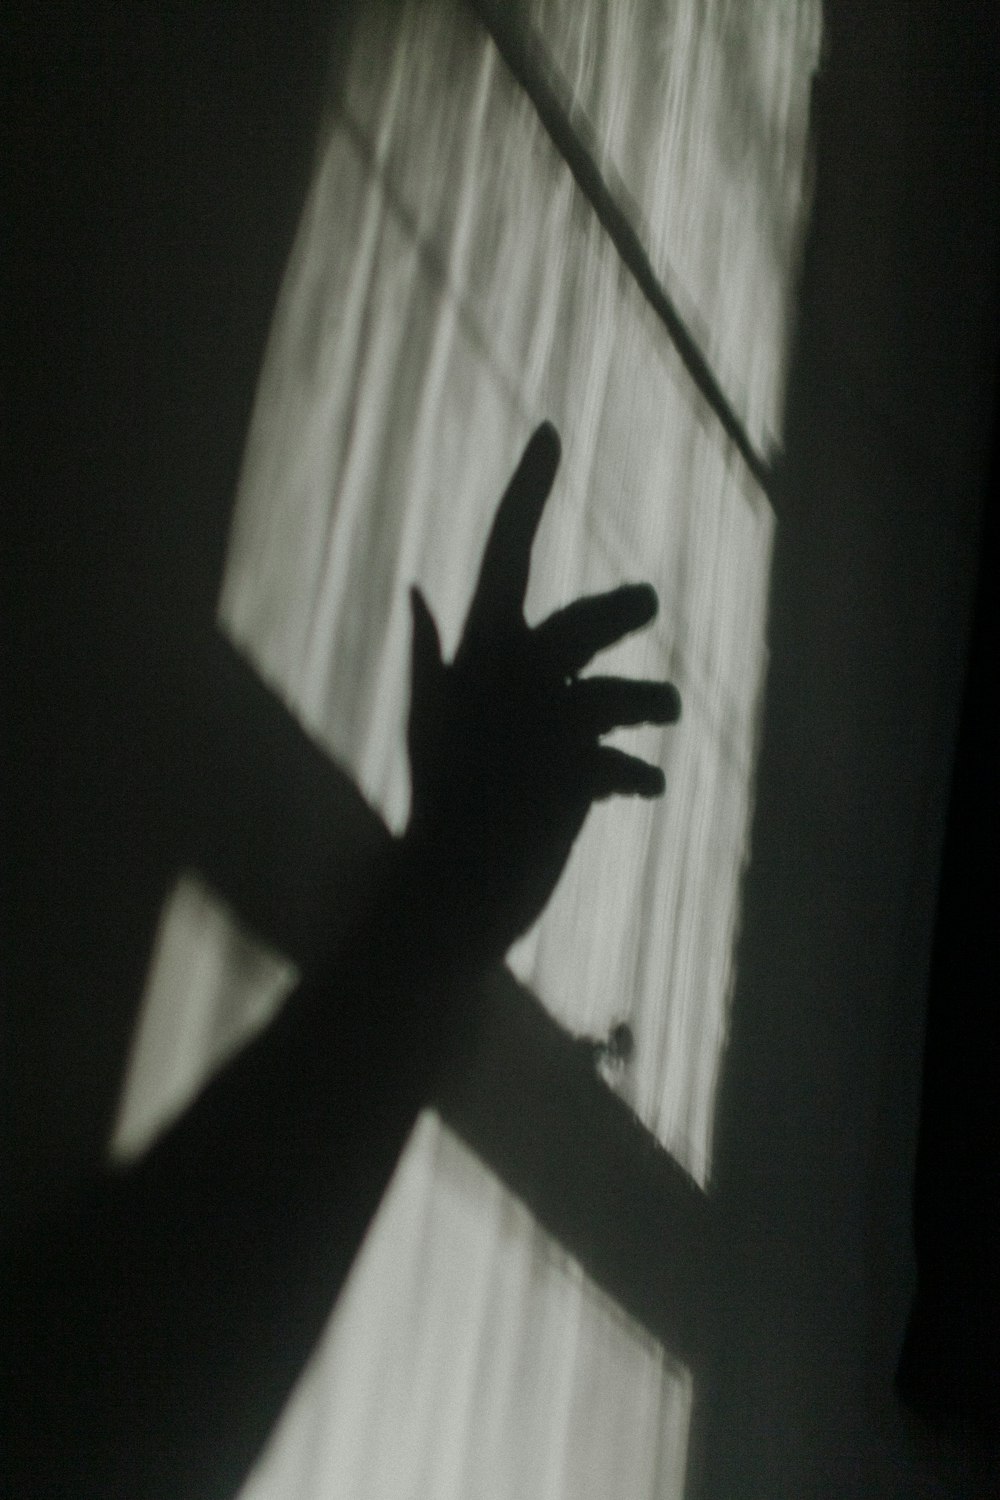 hand shadow on glass window